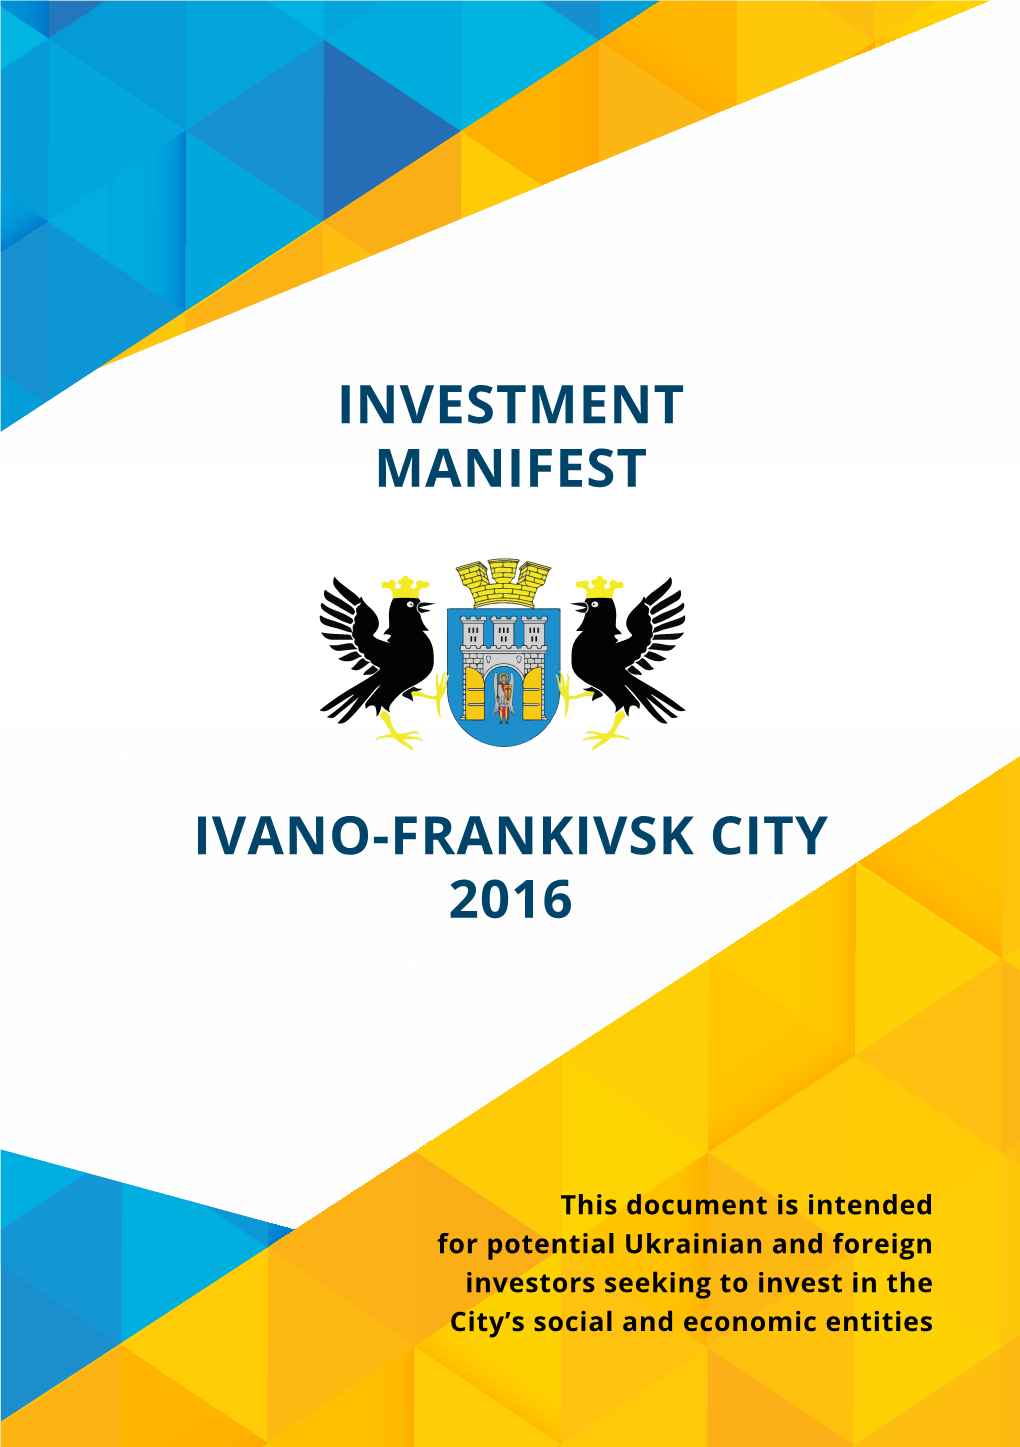 Ivano-Frankivsk City 2016 Investment Manifest